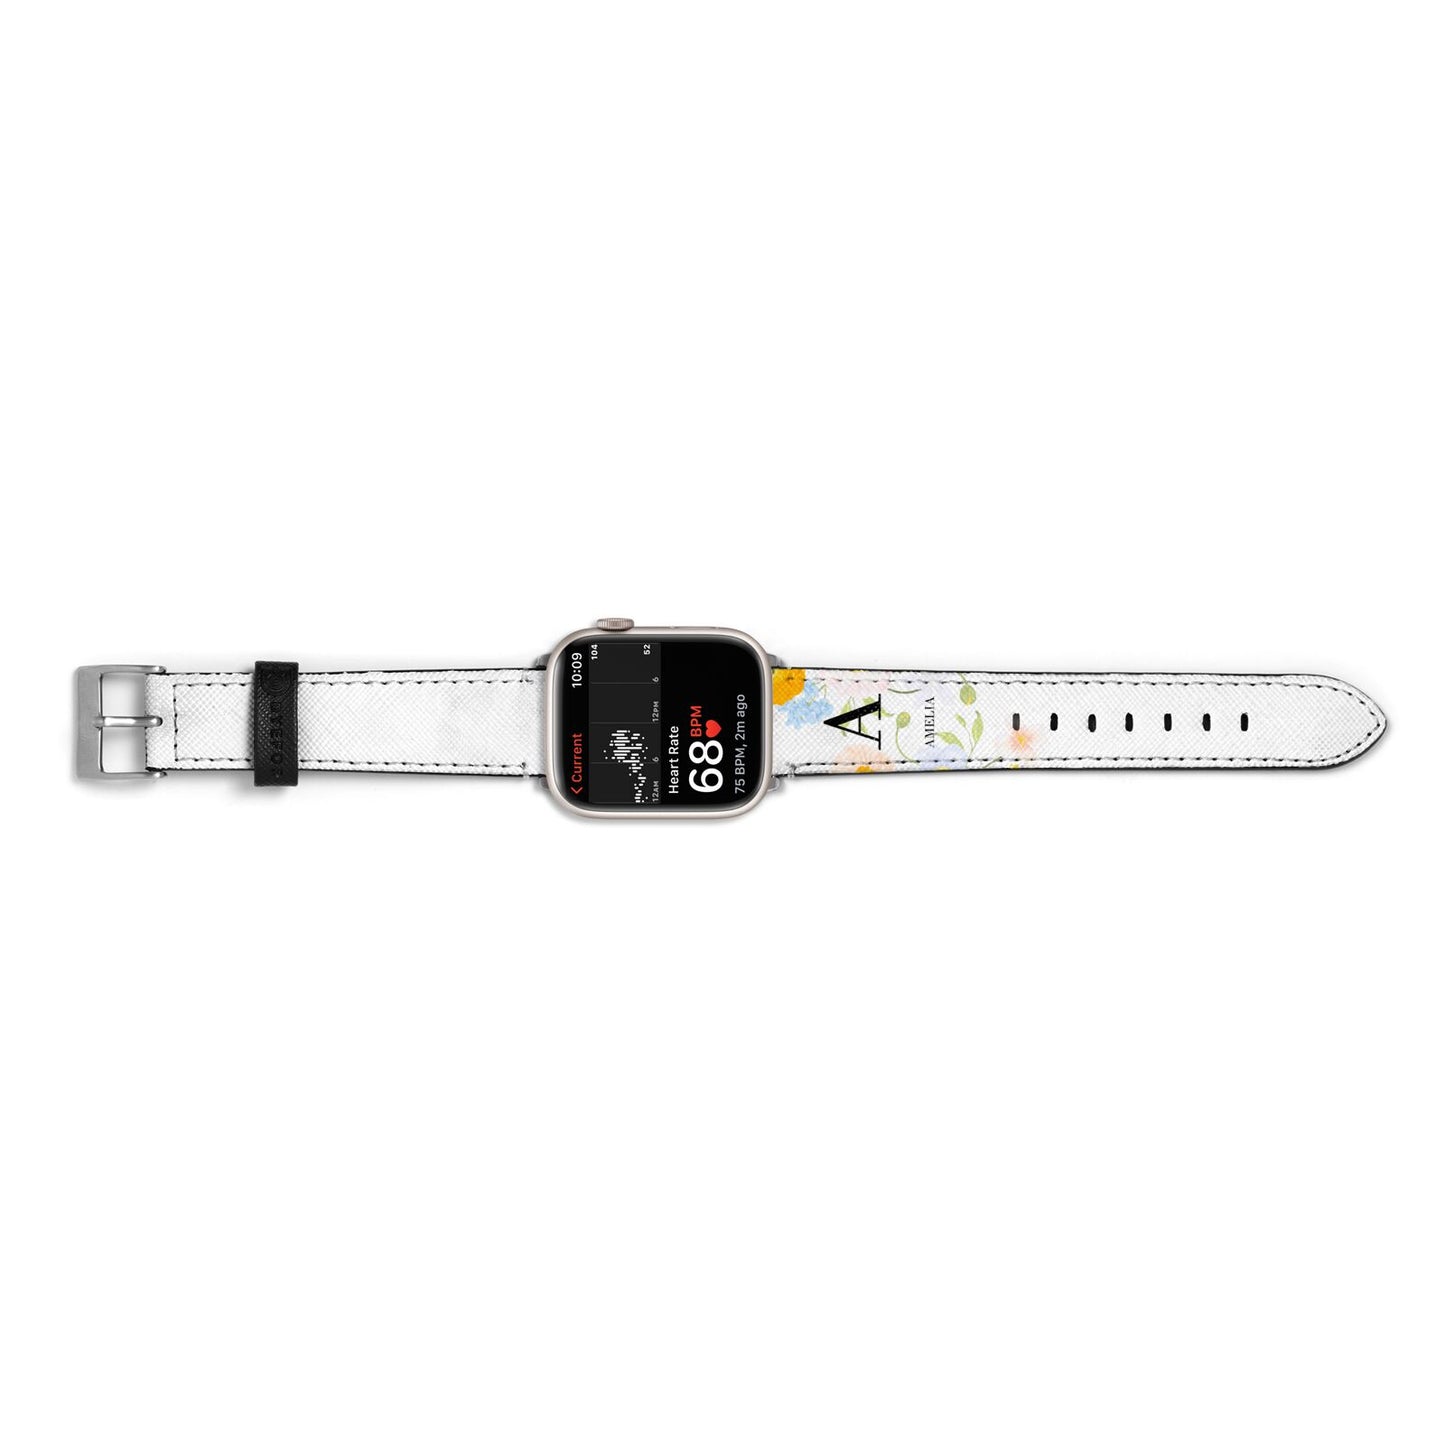 Customised Floral Apple Watch Strap Size 38mm Landscape Image Silver Hardware